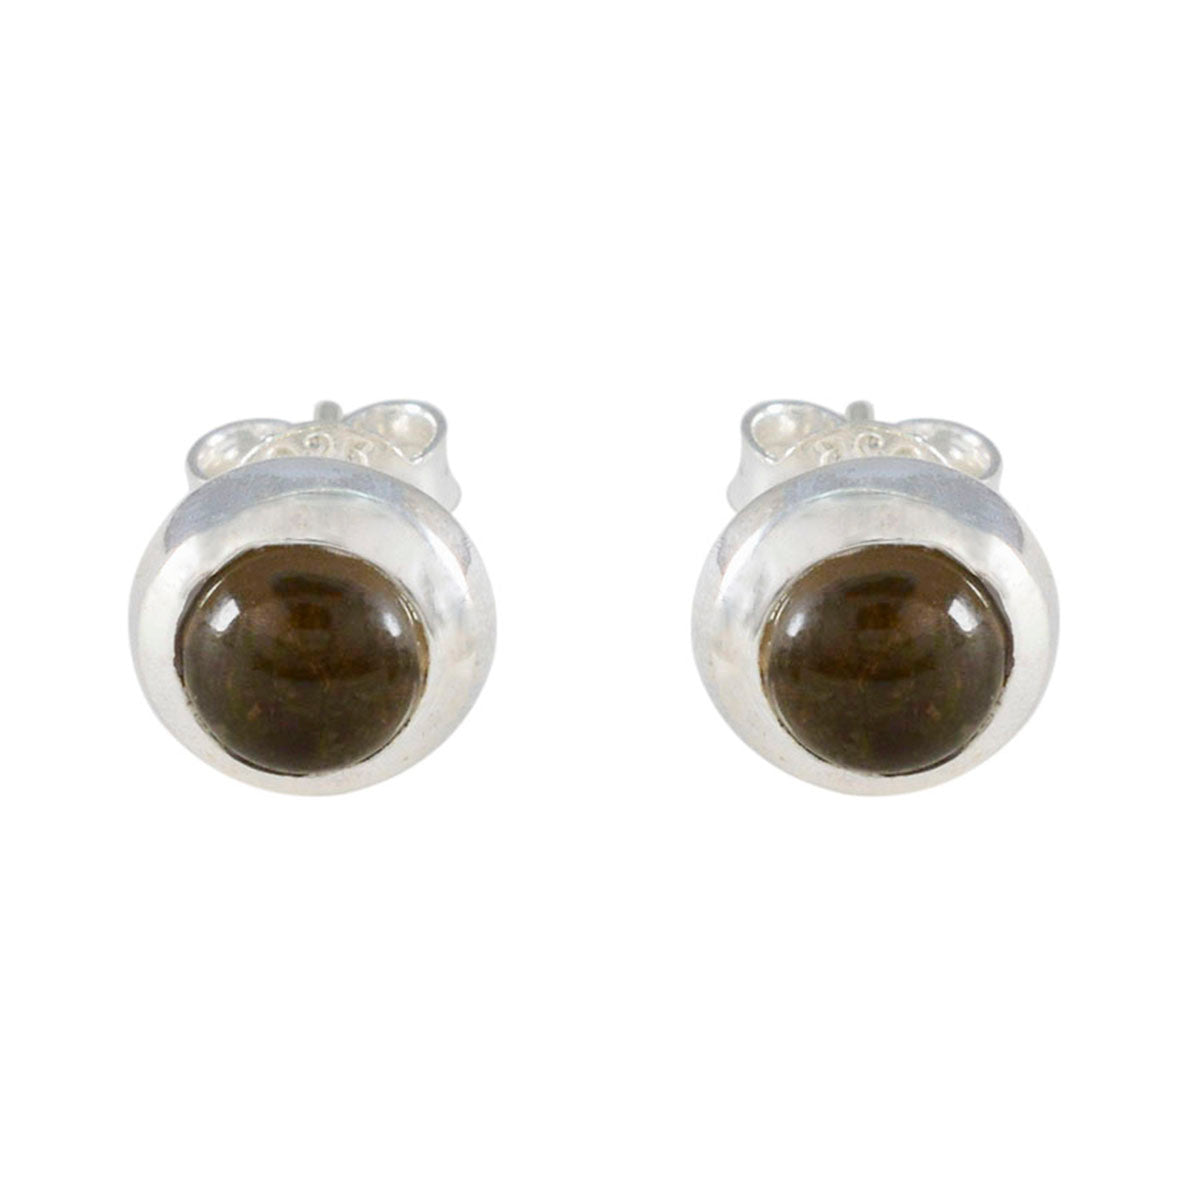 Riyo Comely 925 Sterling Silver Earring For Wife Smoky Quartz Earring Bezel Setting Brown Earring Stud Earring